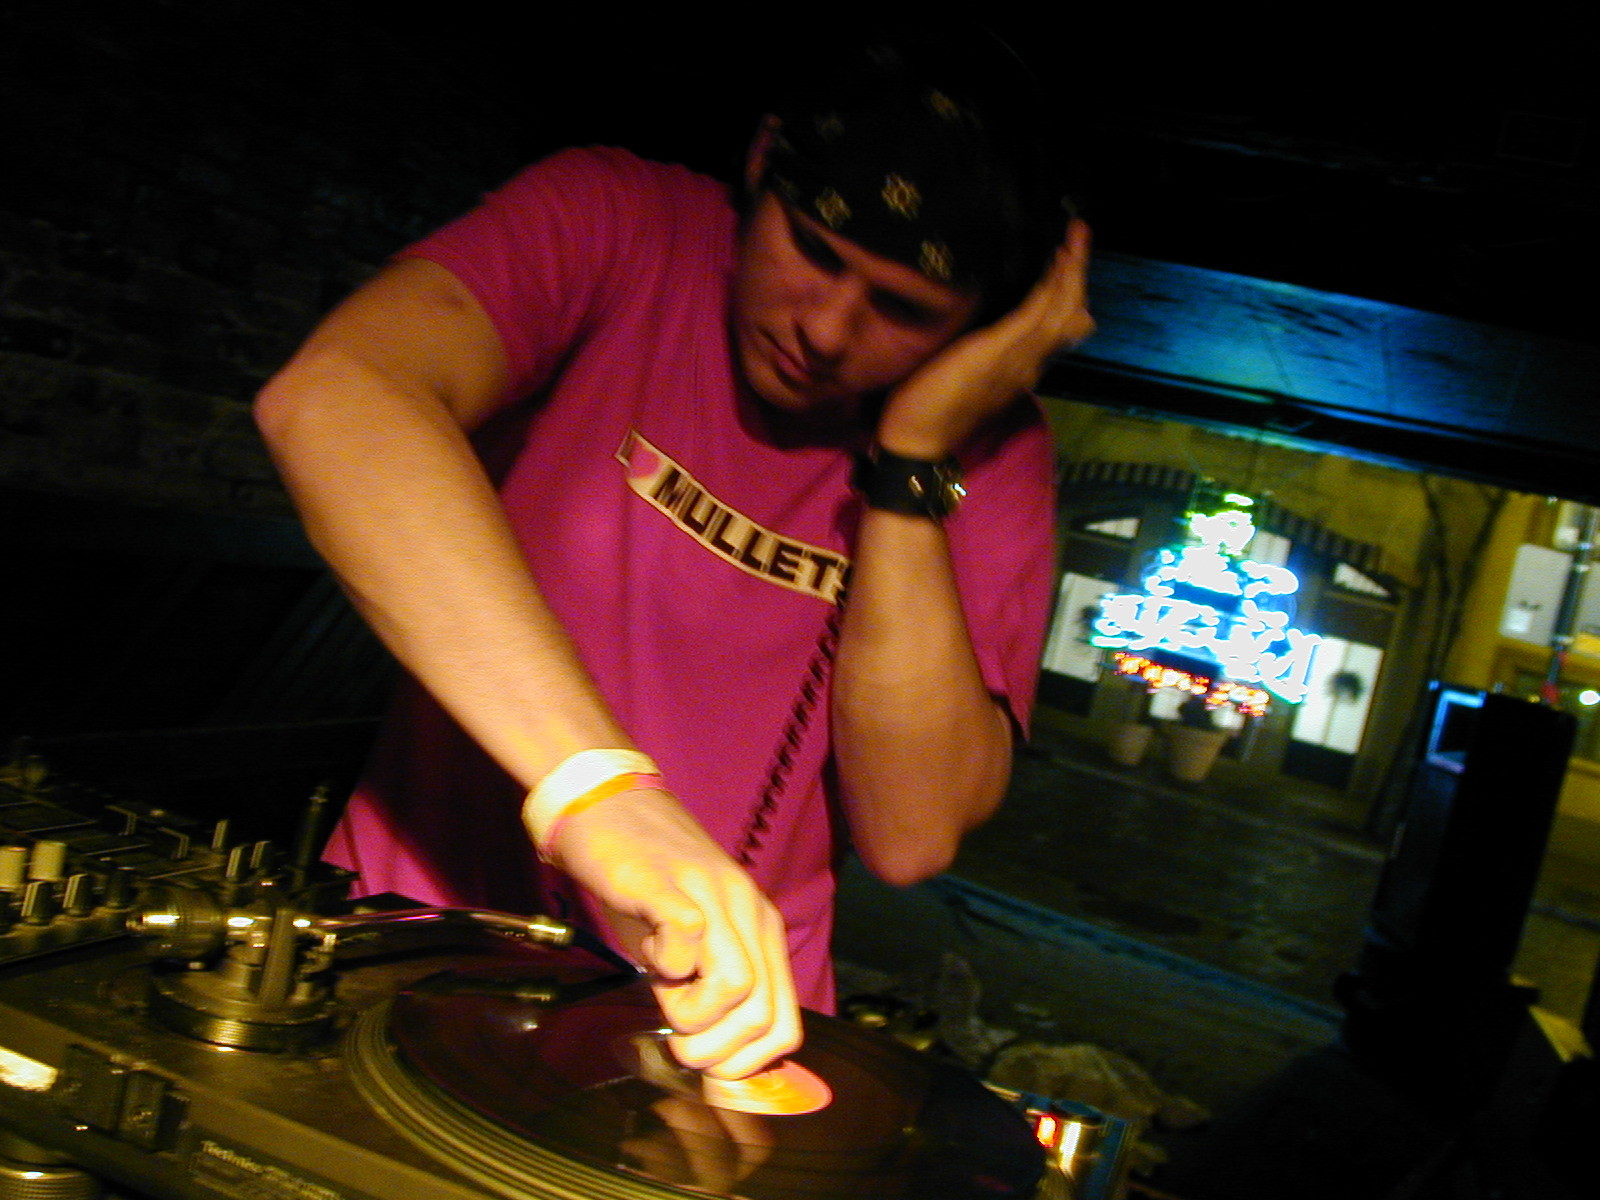 20-something DJ playing records